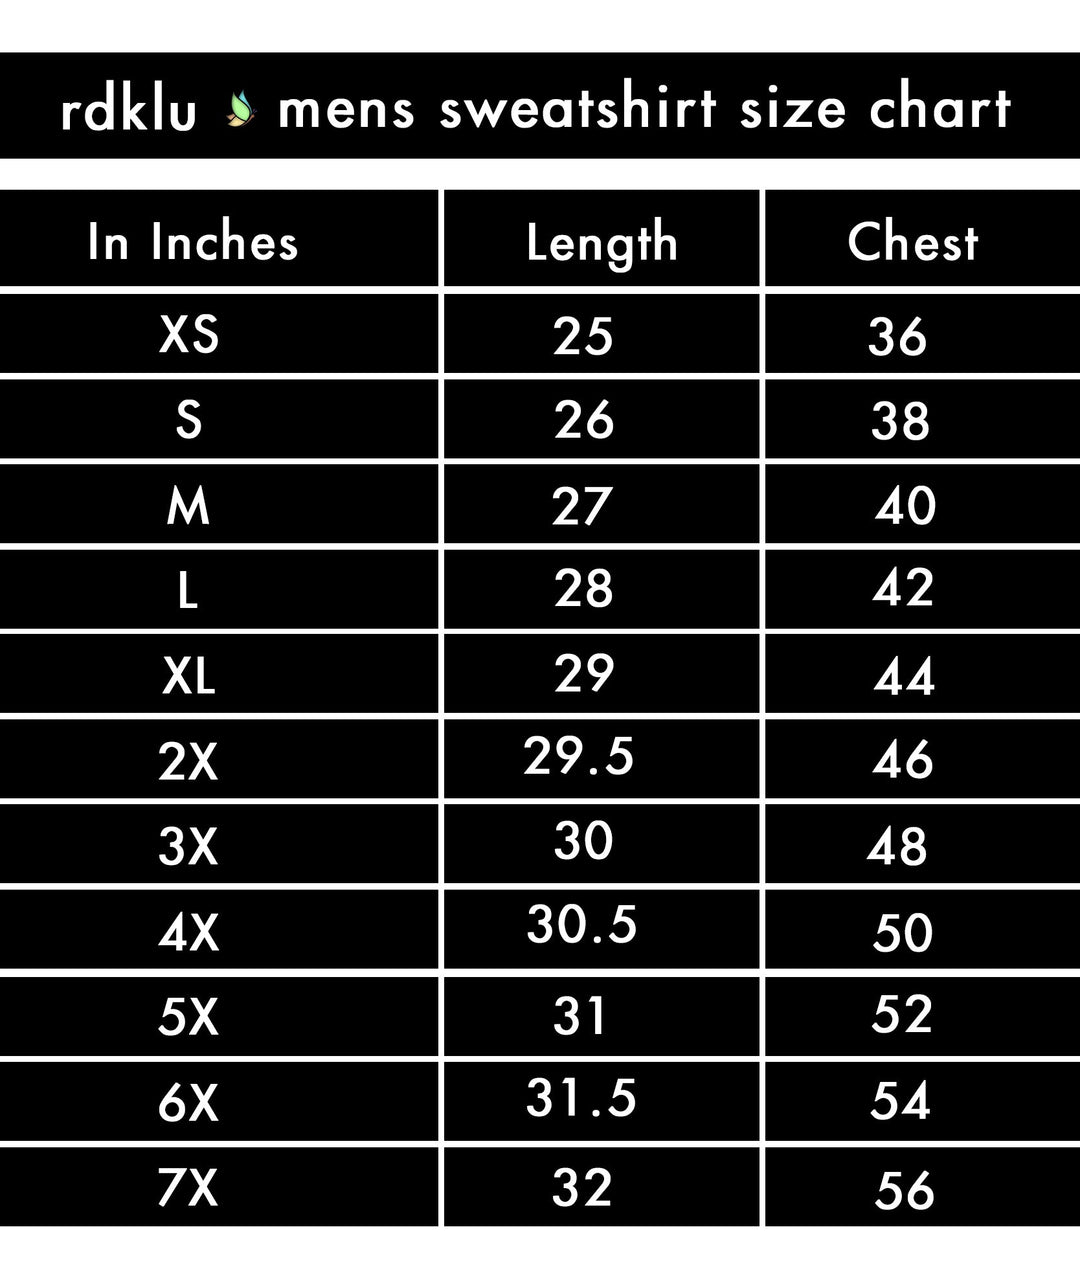 RDKLU MENS SWEATSHIRT - RDKL-Men's Sweatshirt#158